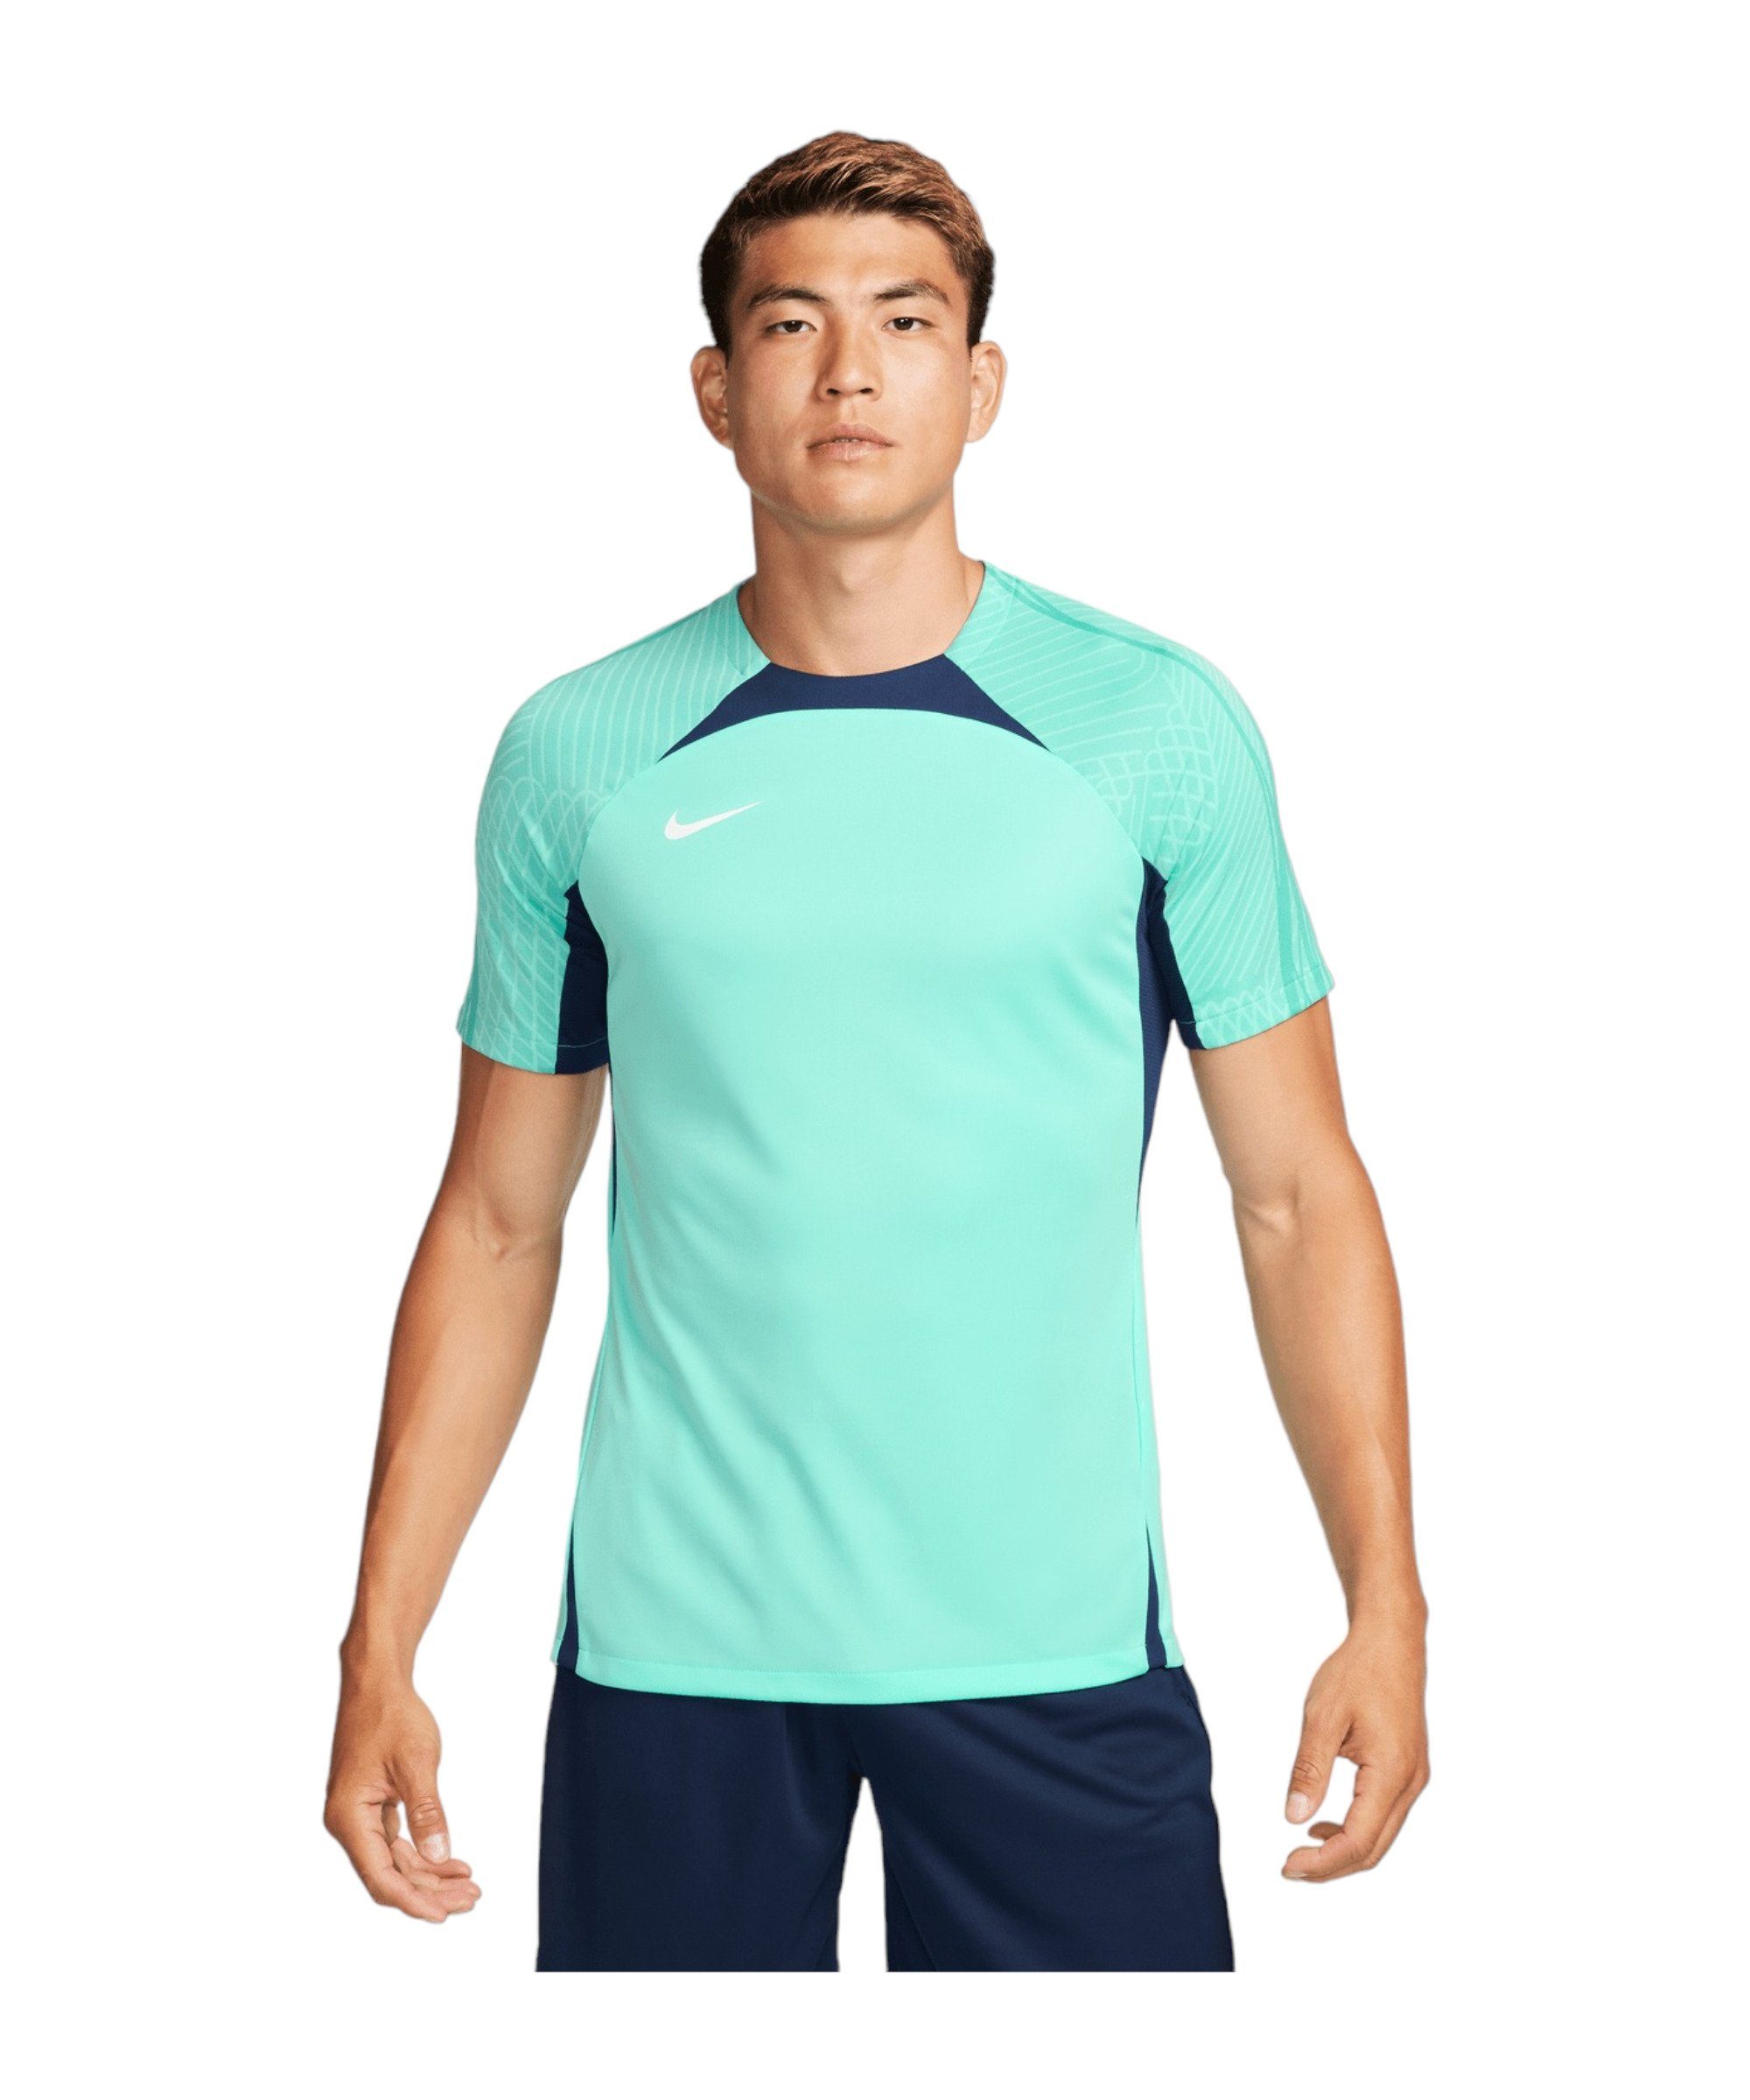 Perfekte Qualität! Nike T-Shirt Strike Trainingsshirt default gruen